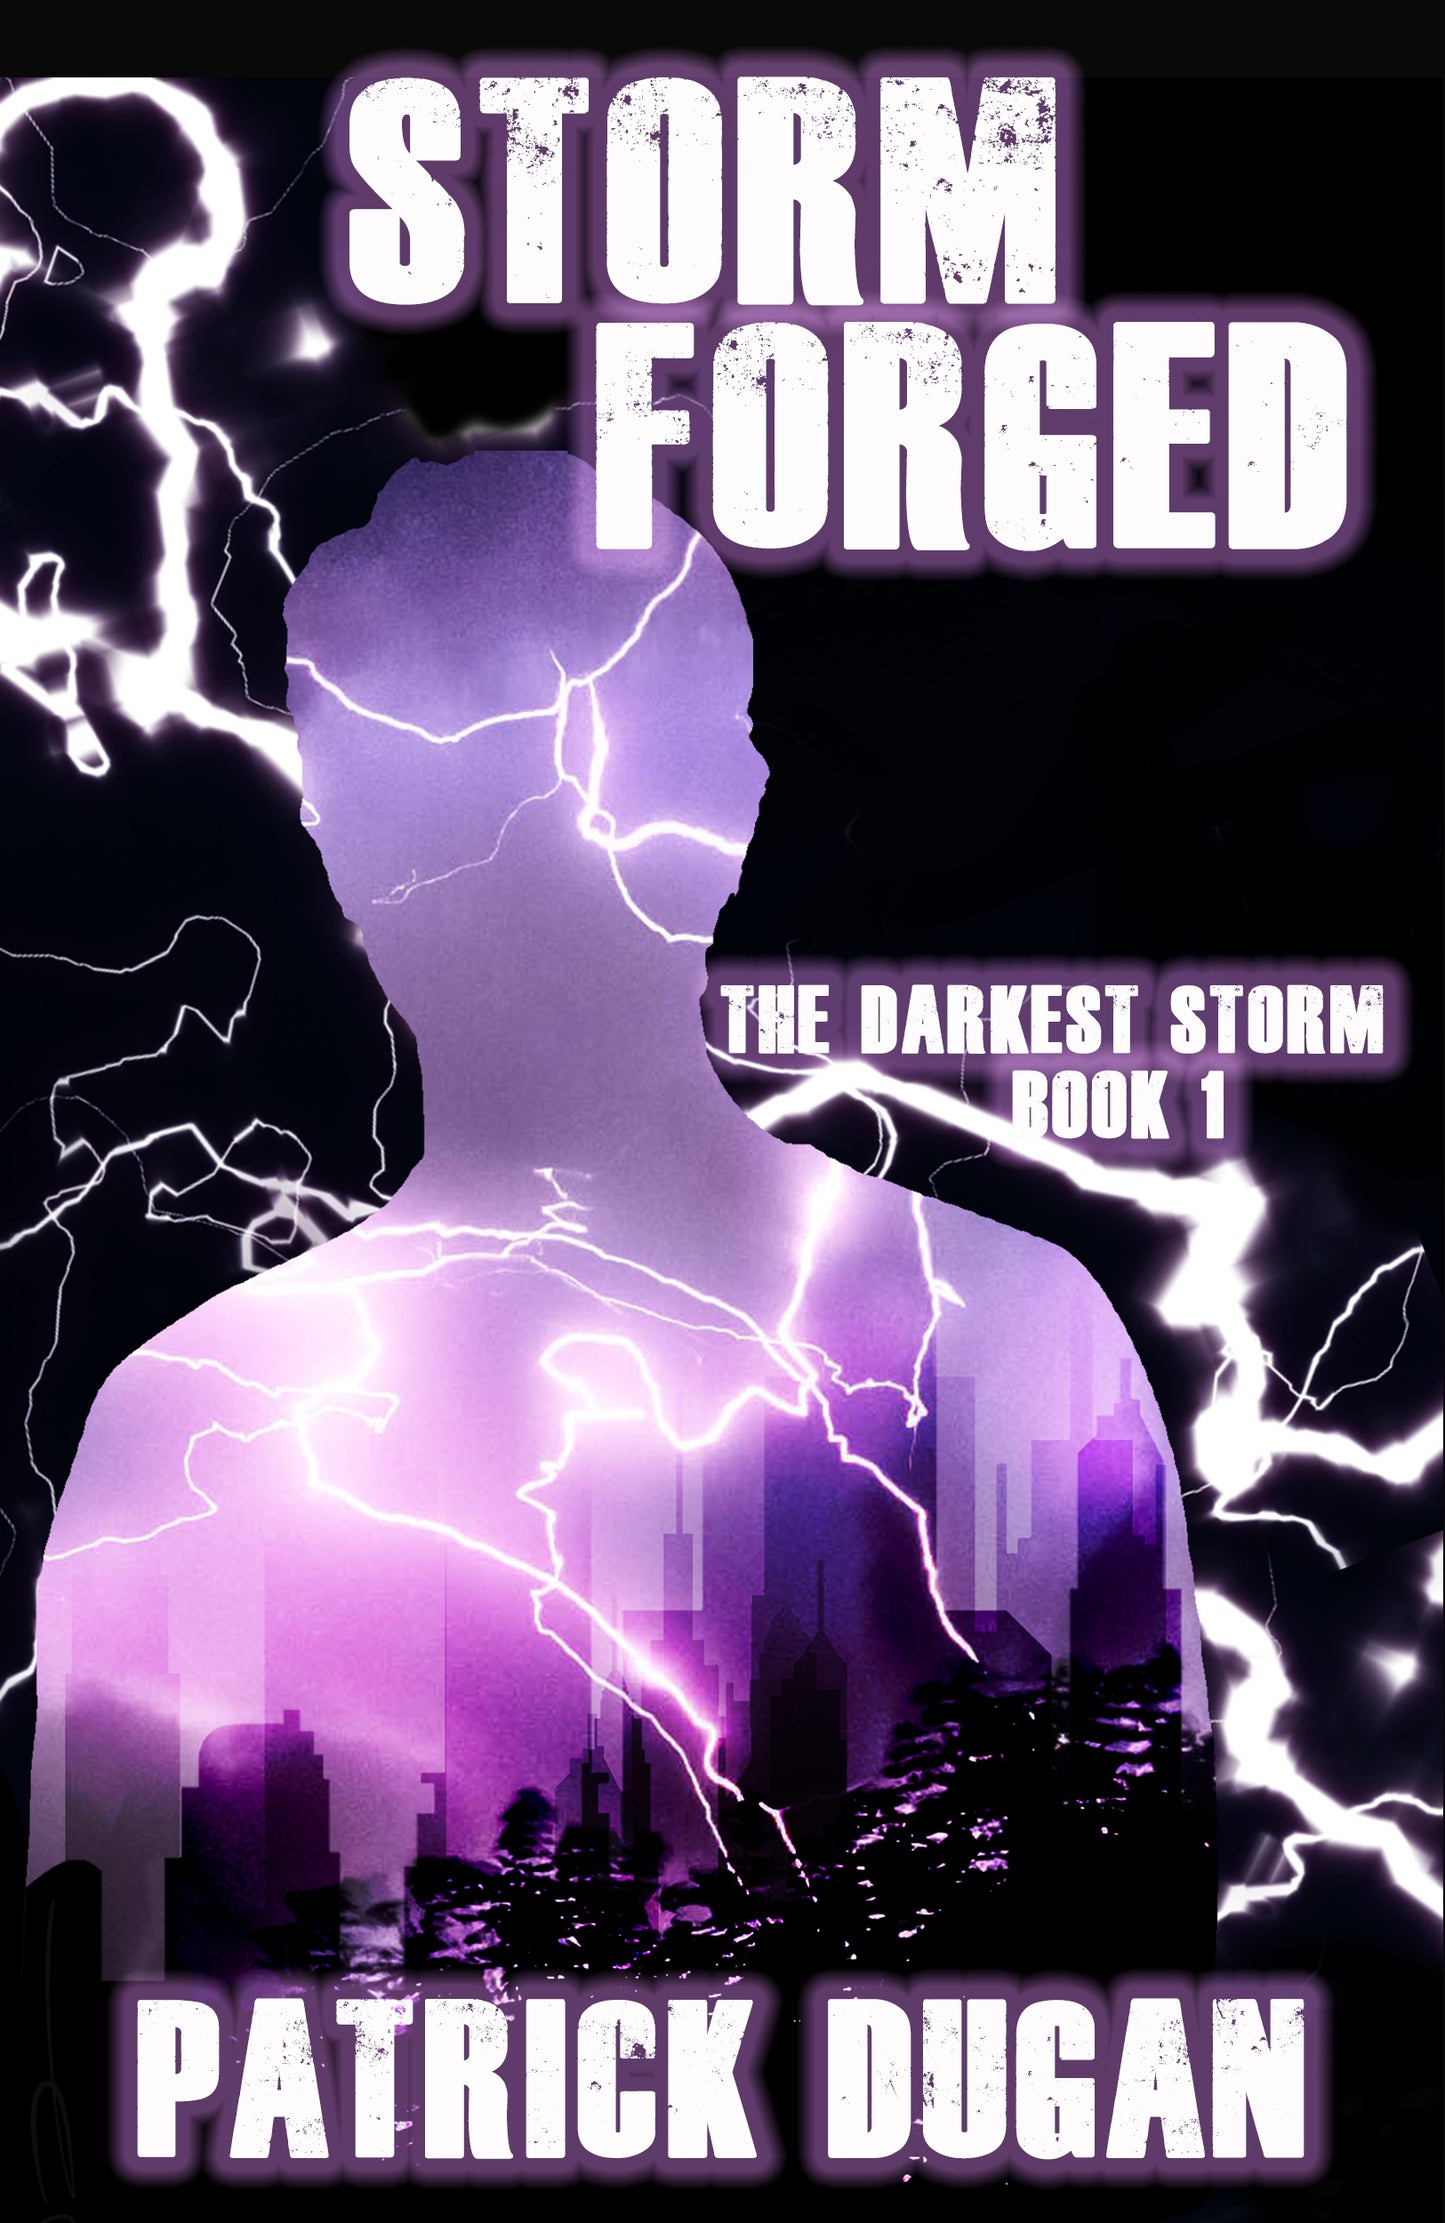 Darkest Storm Paperback Bundle!